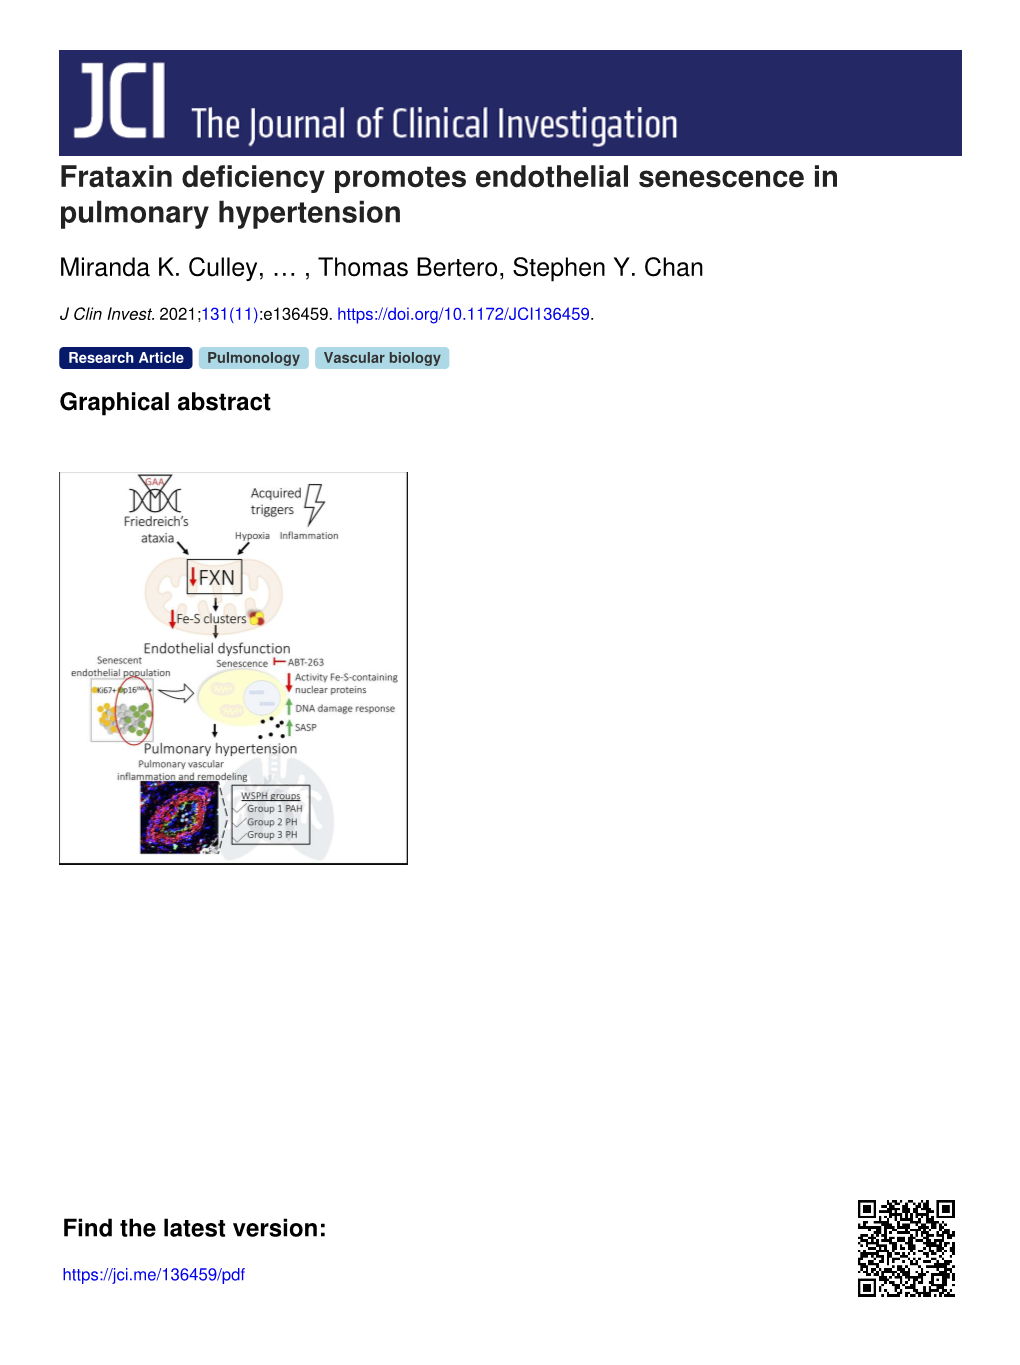 Frataxin Deficiency Promotes Endothelial Senescence in Pulmonary Hypertension